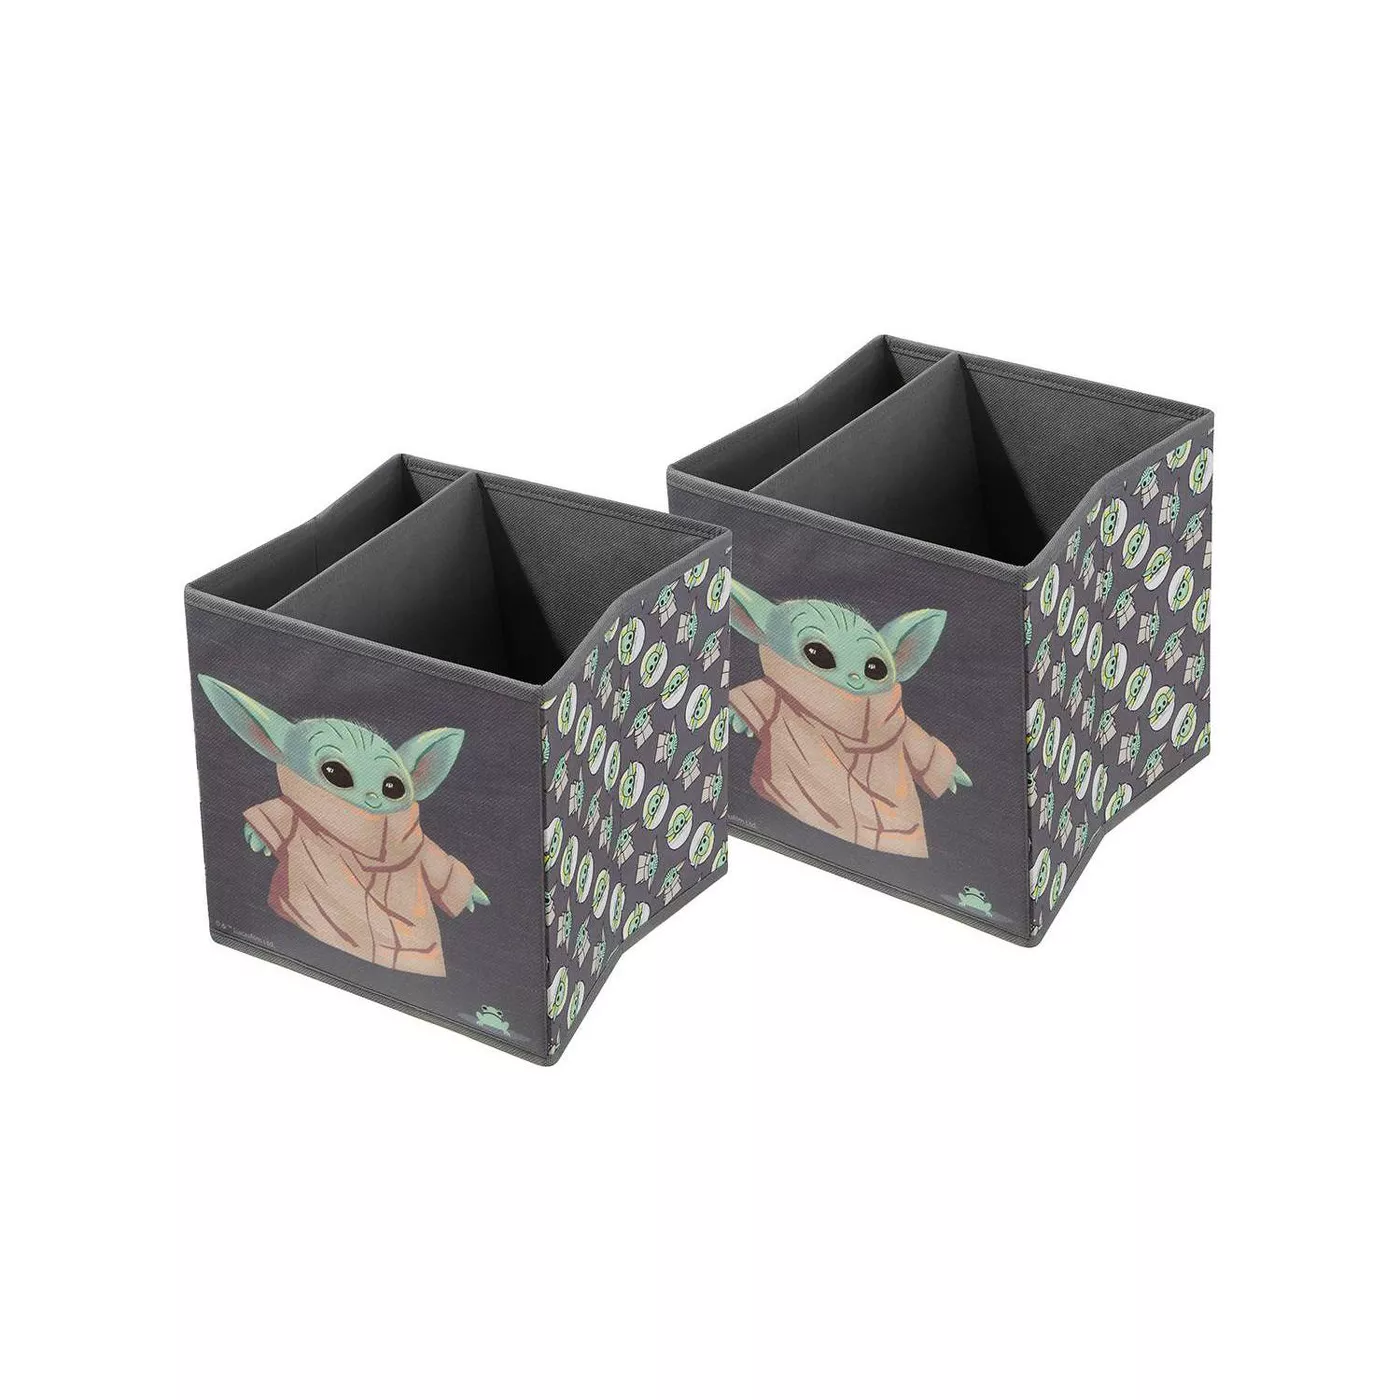 Star Wars Baby Yoda Storage Bins